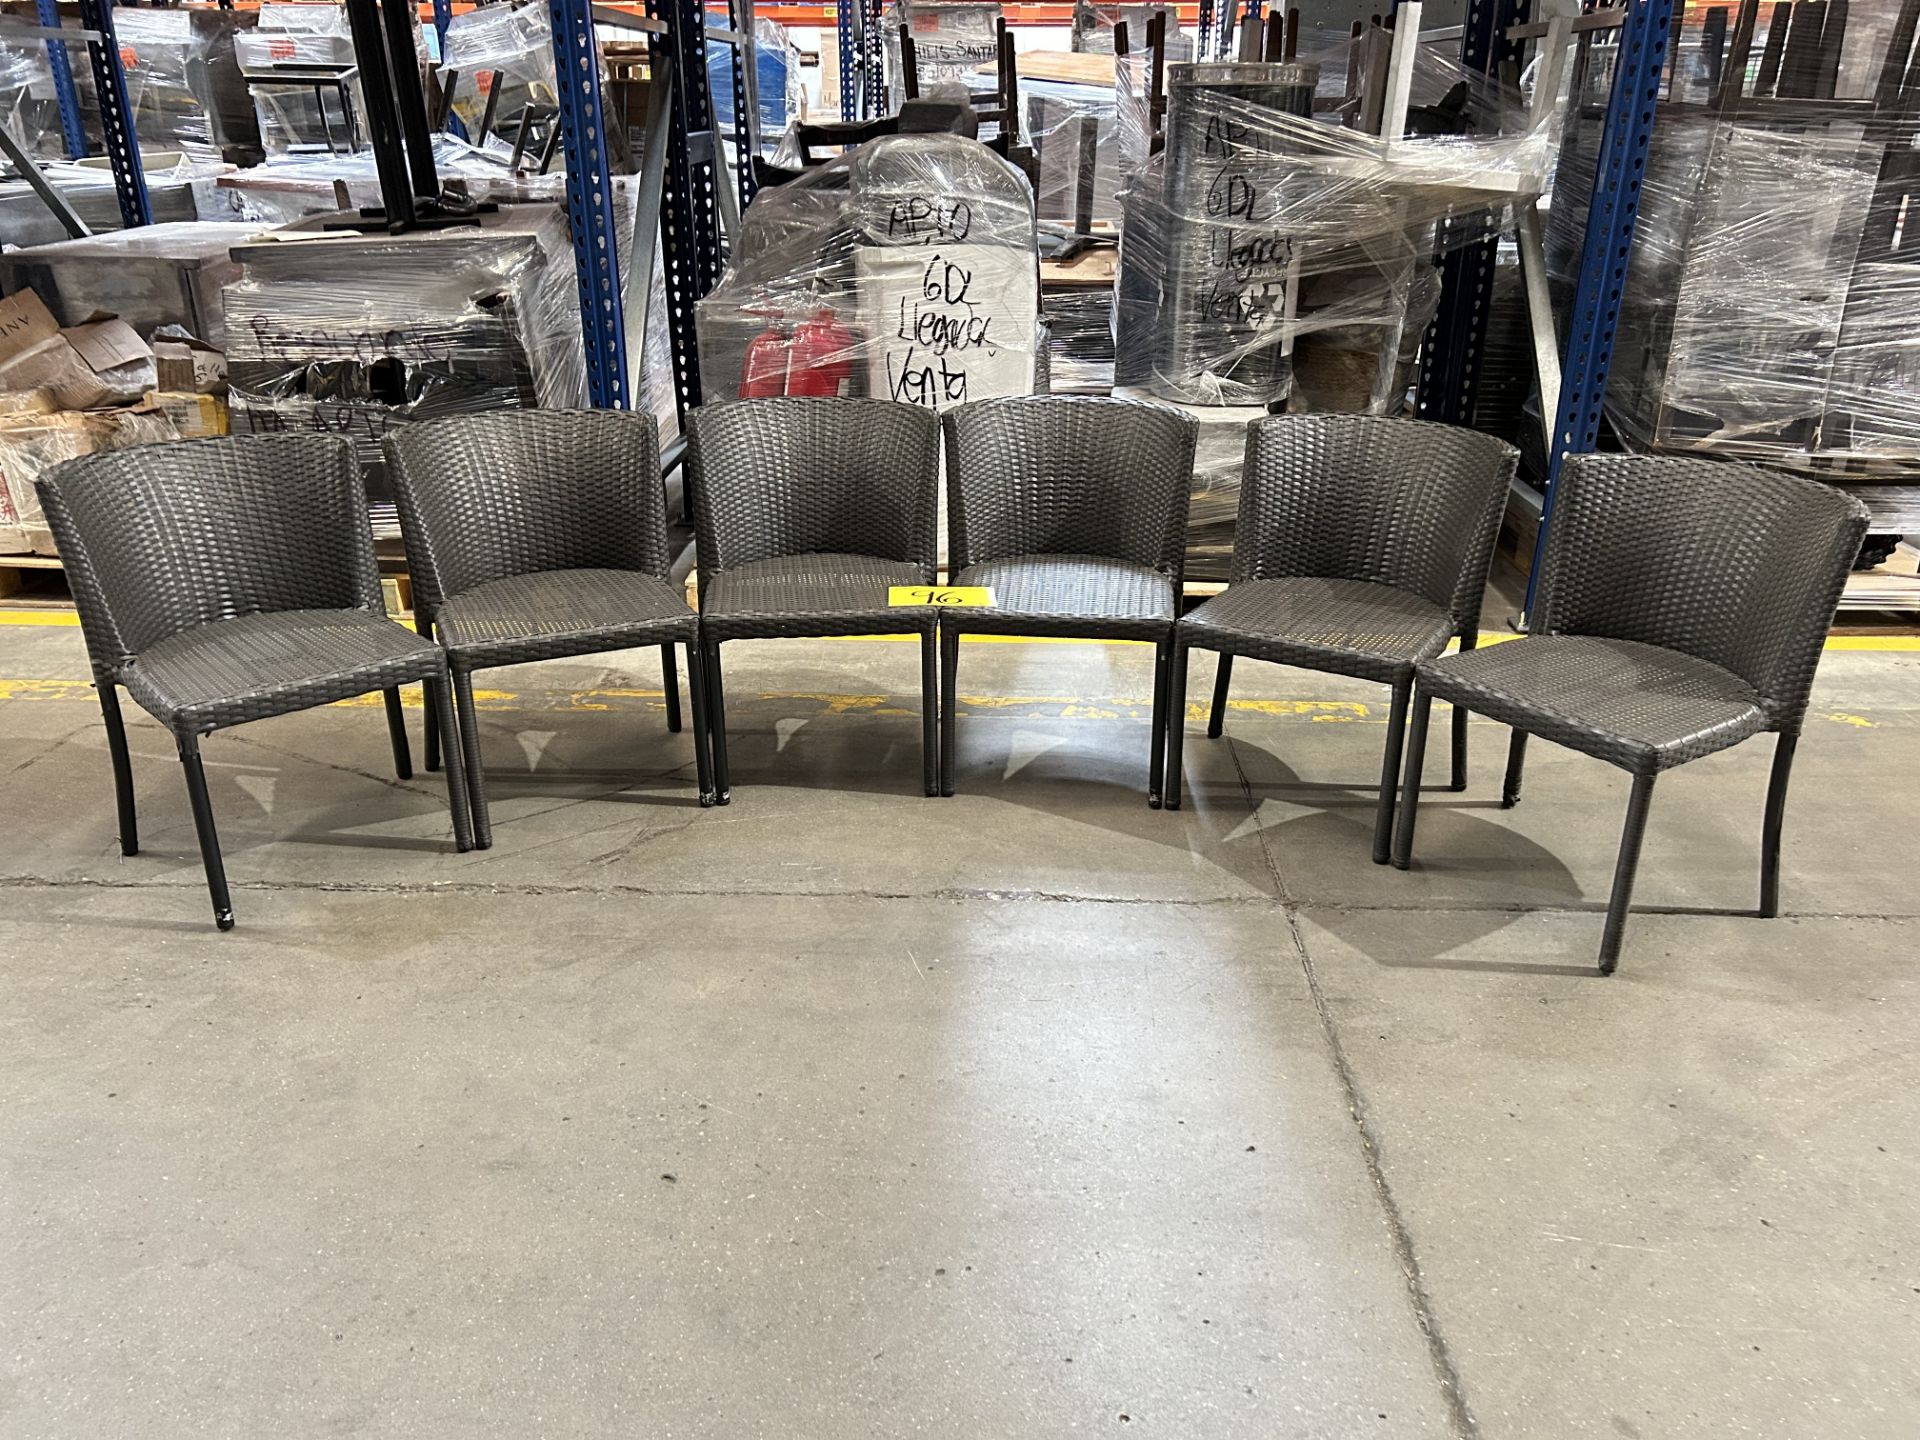 6 sillas de ratán respaldo curvo para exterior Color Café Medidas 55 cm x 62 cm x 74 cm (Equipo Usa